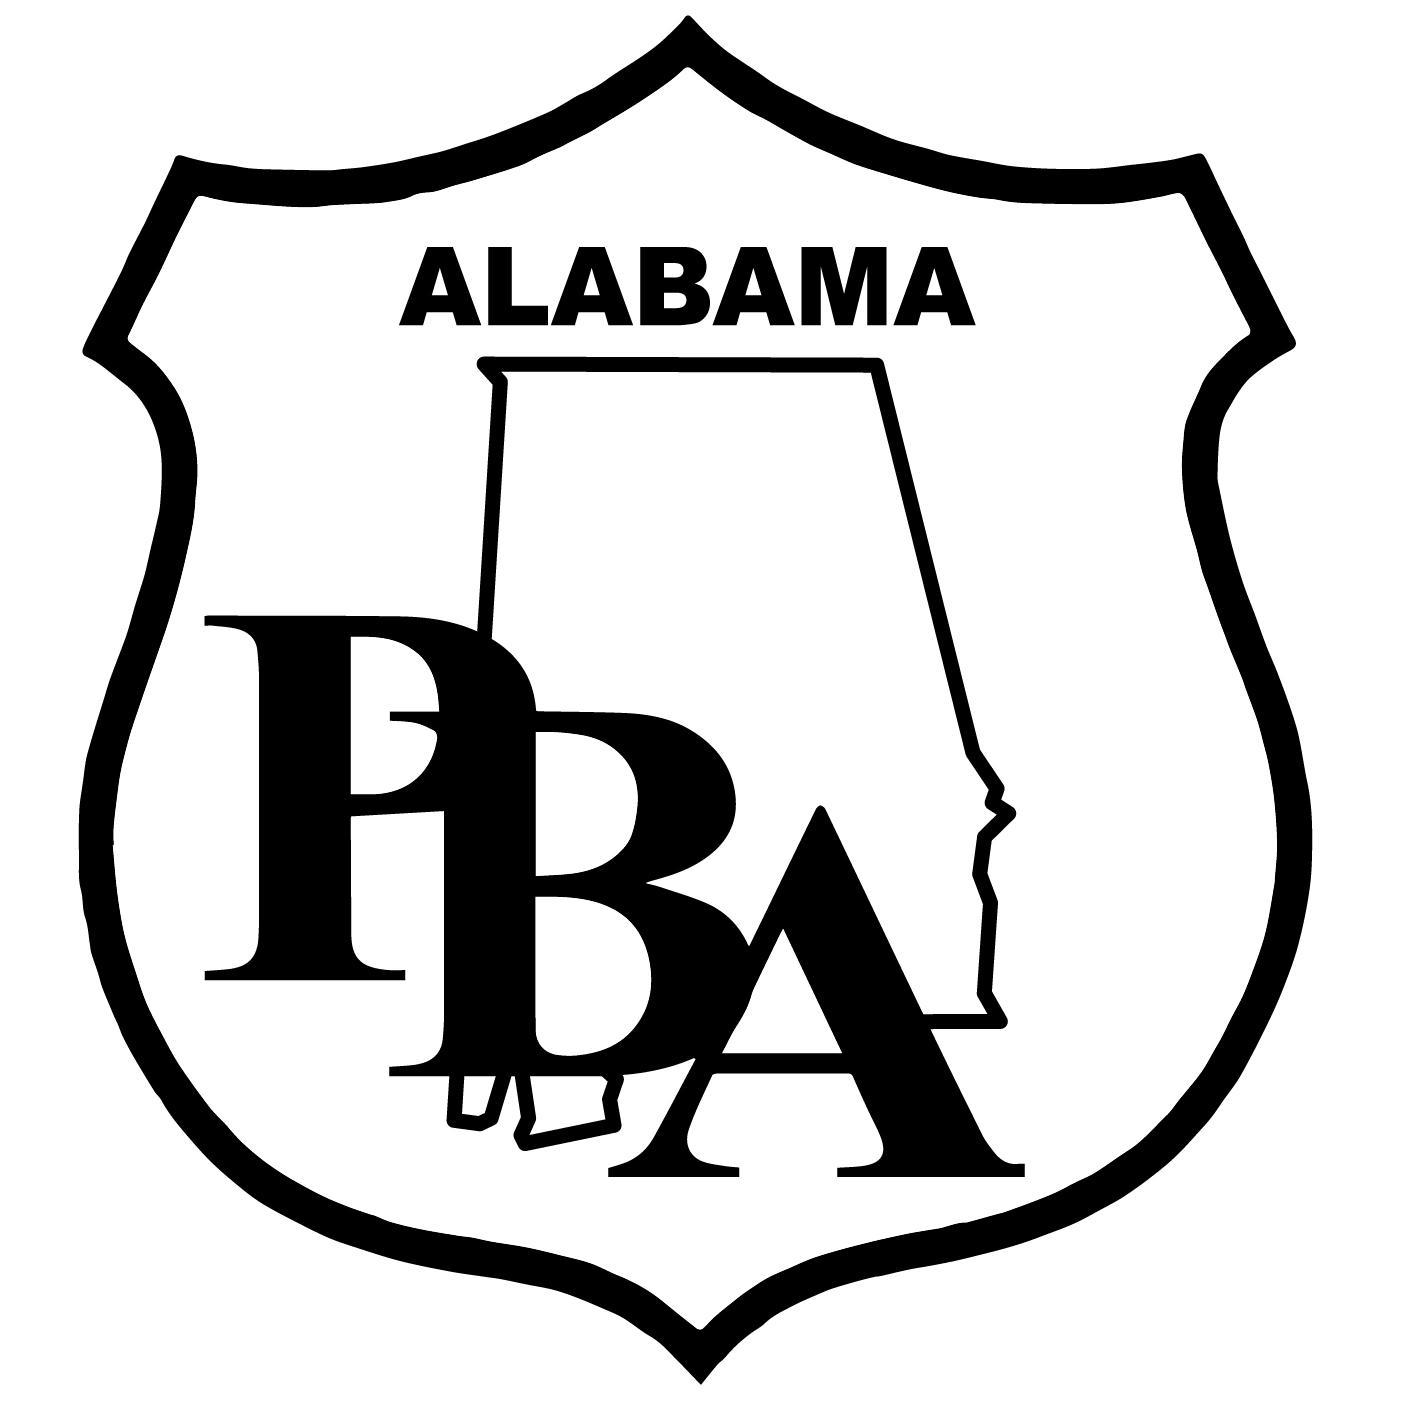 The Alabama Police Benevolent Association